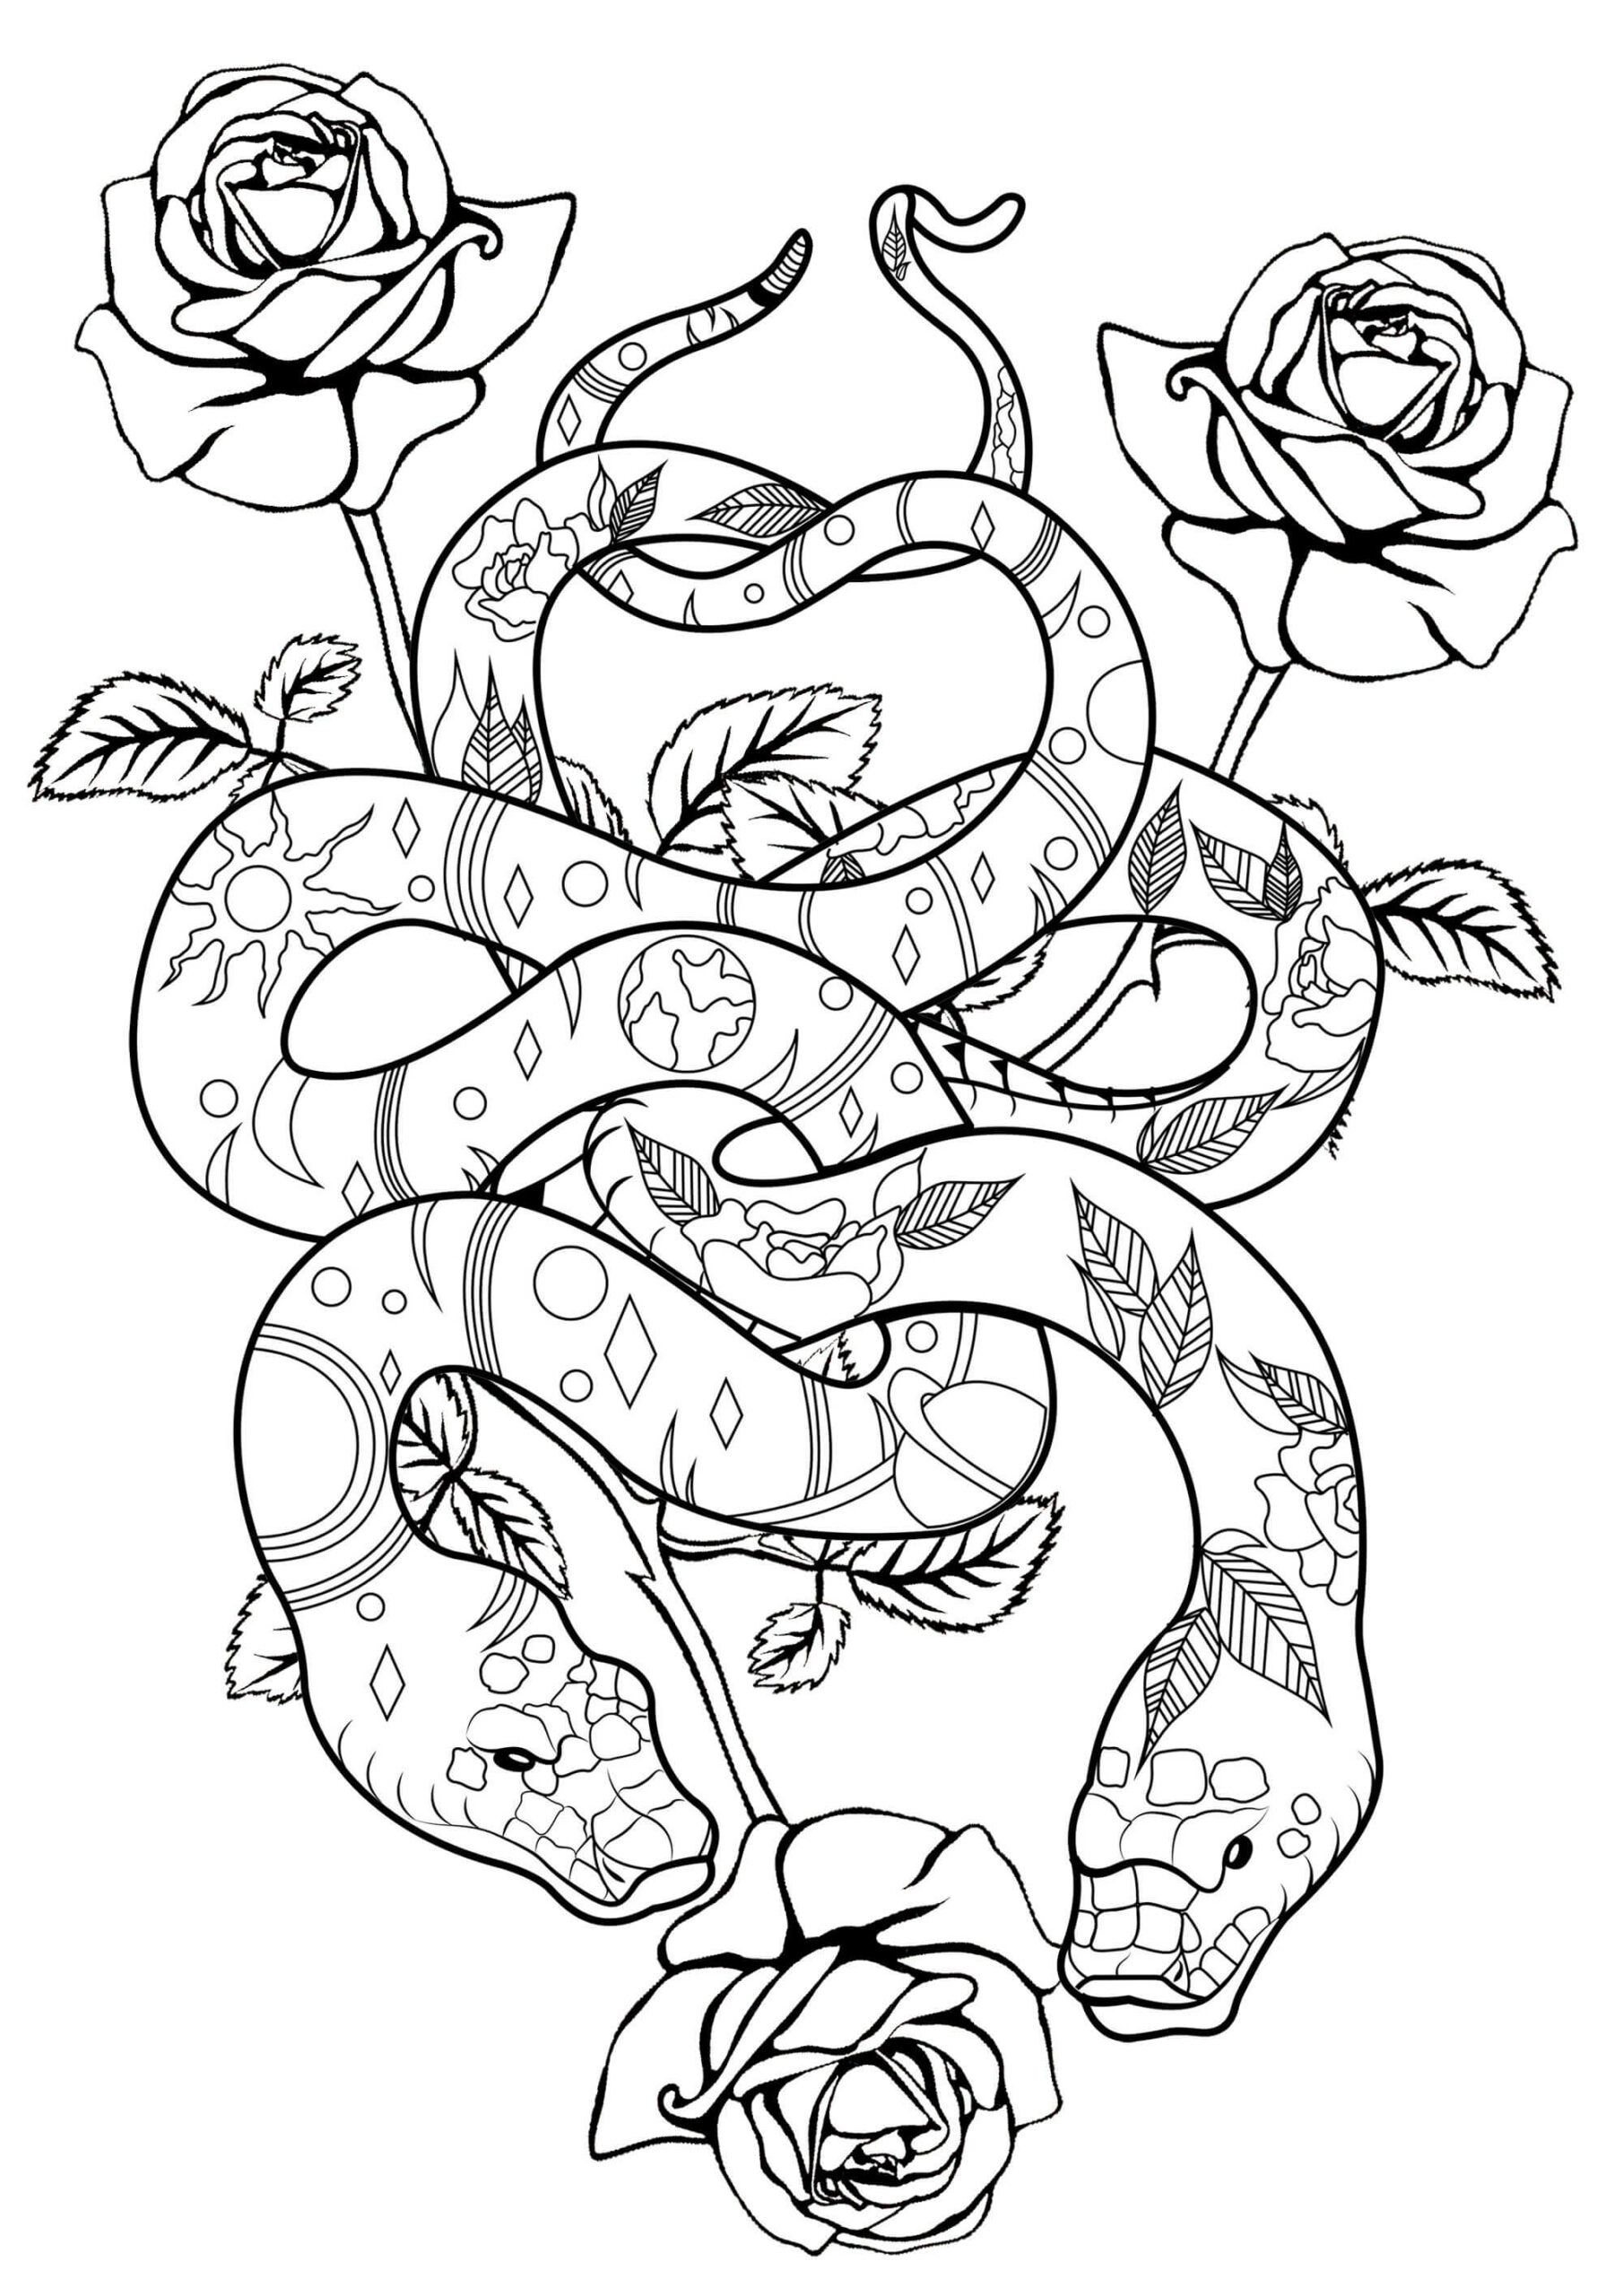 Mandala Two Snakes With Roses Coloring Page Mandalas